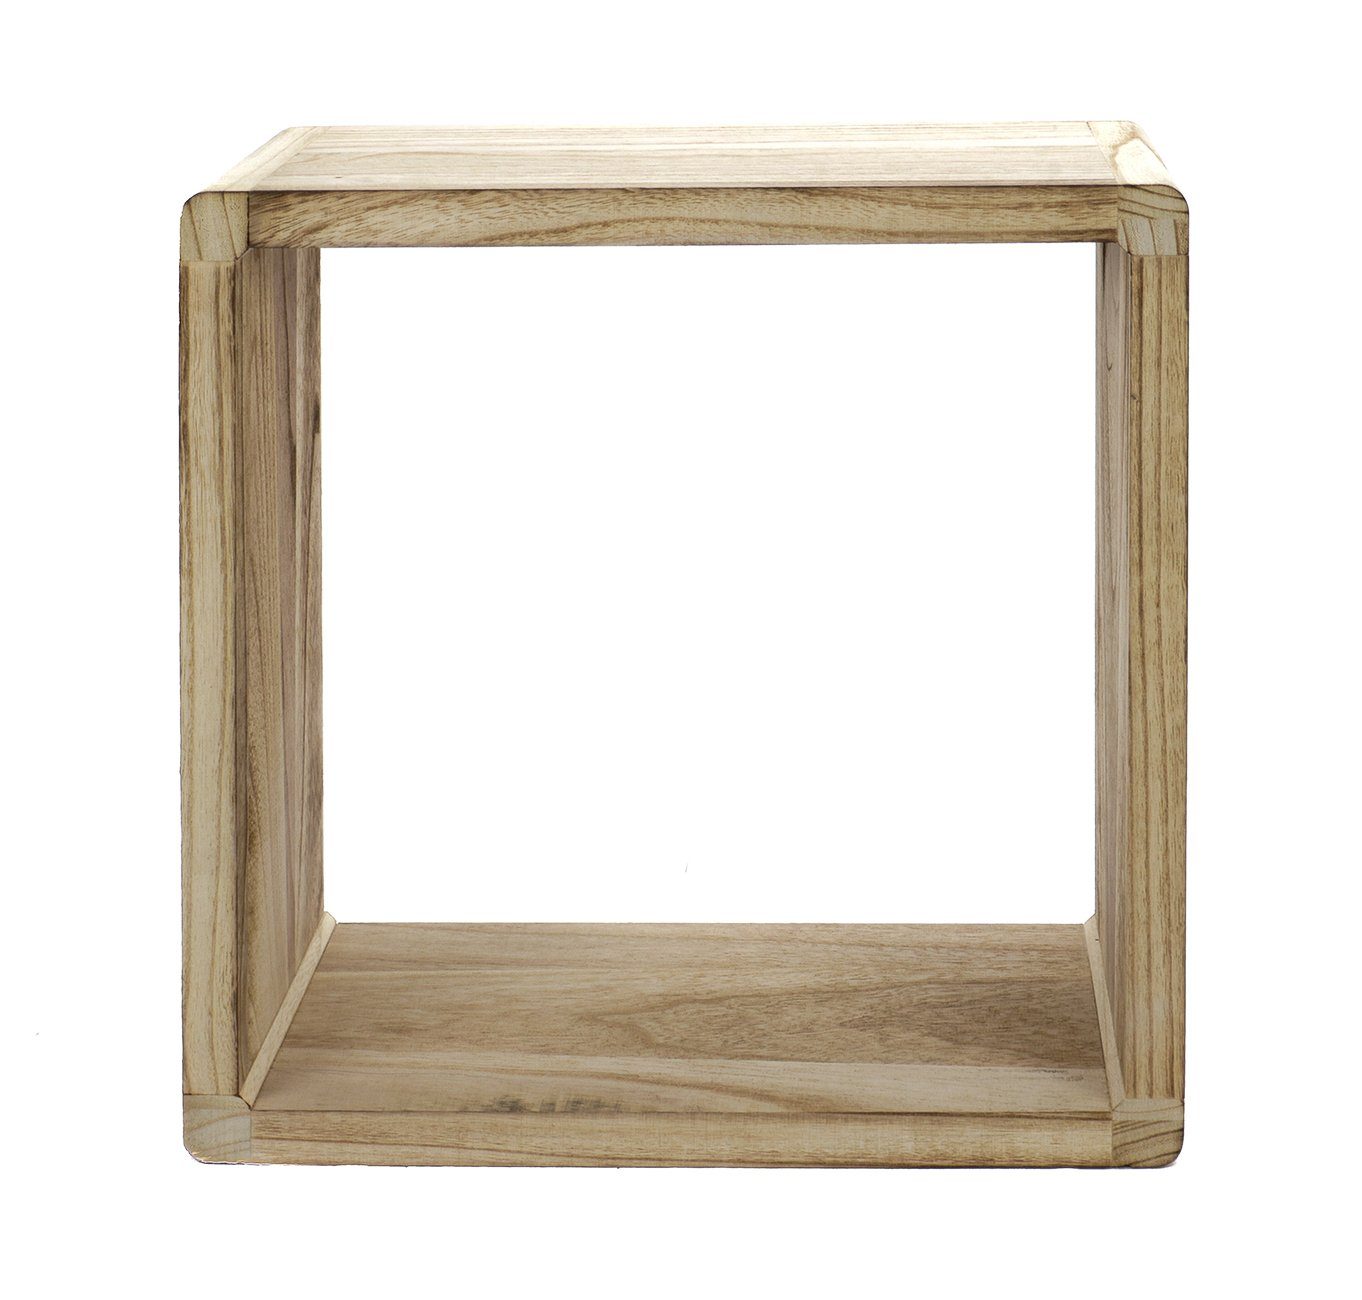 Bubble-Store Standregal Holz Bodenregal, 3 Set 3er Regale Cube Größen Natur in 3-tlg., verschiedenen Würfelregal